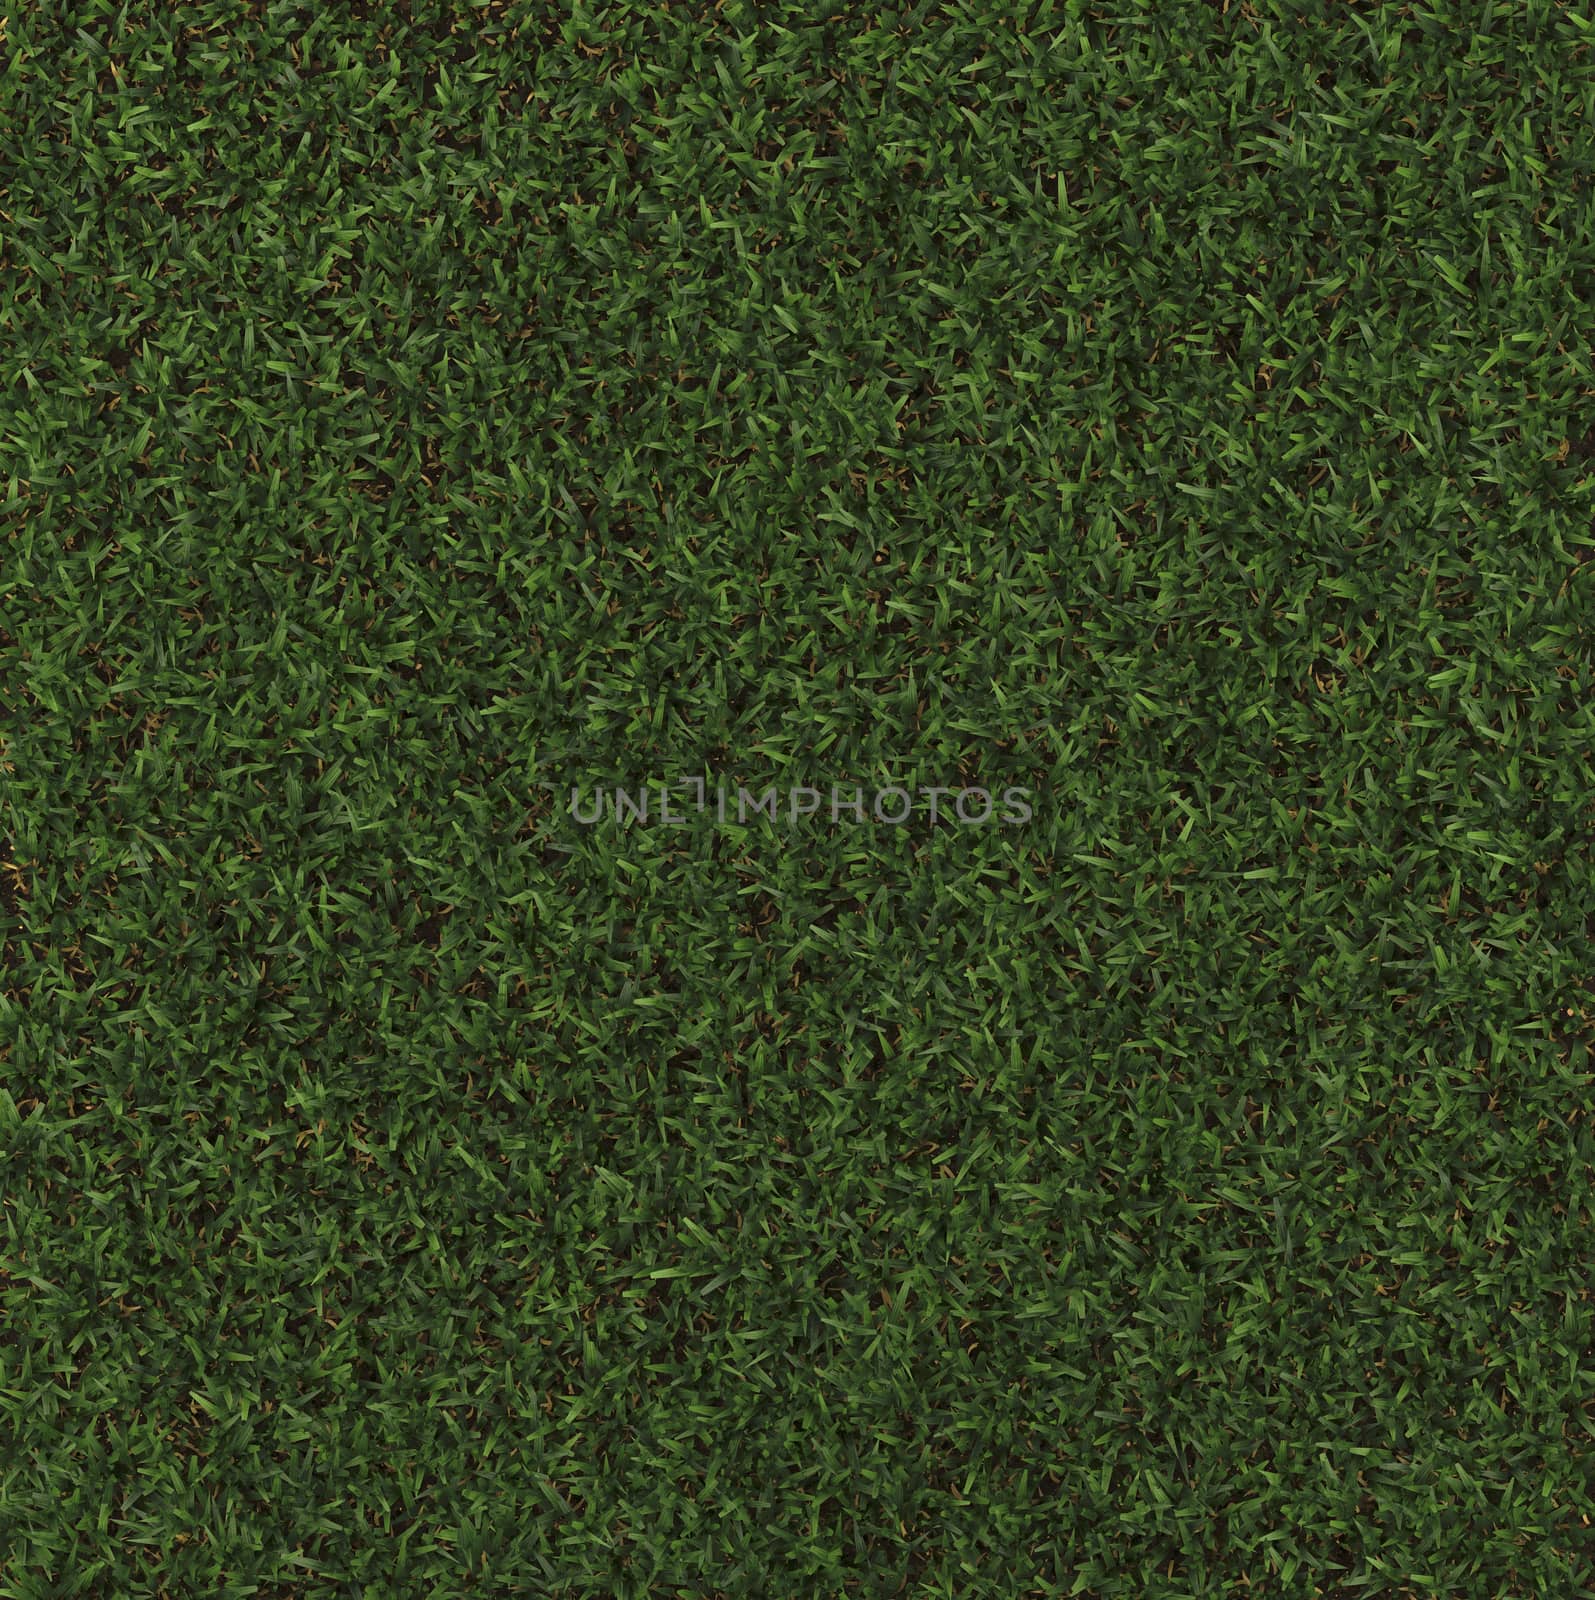 Perfect Grass by vitanovski